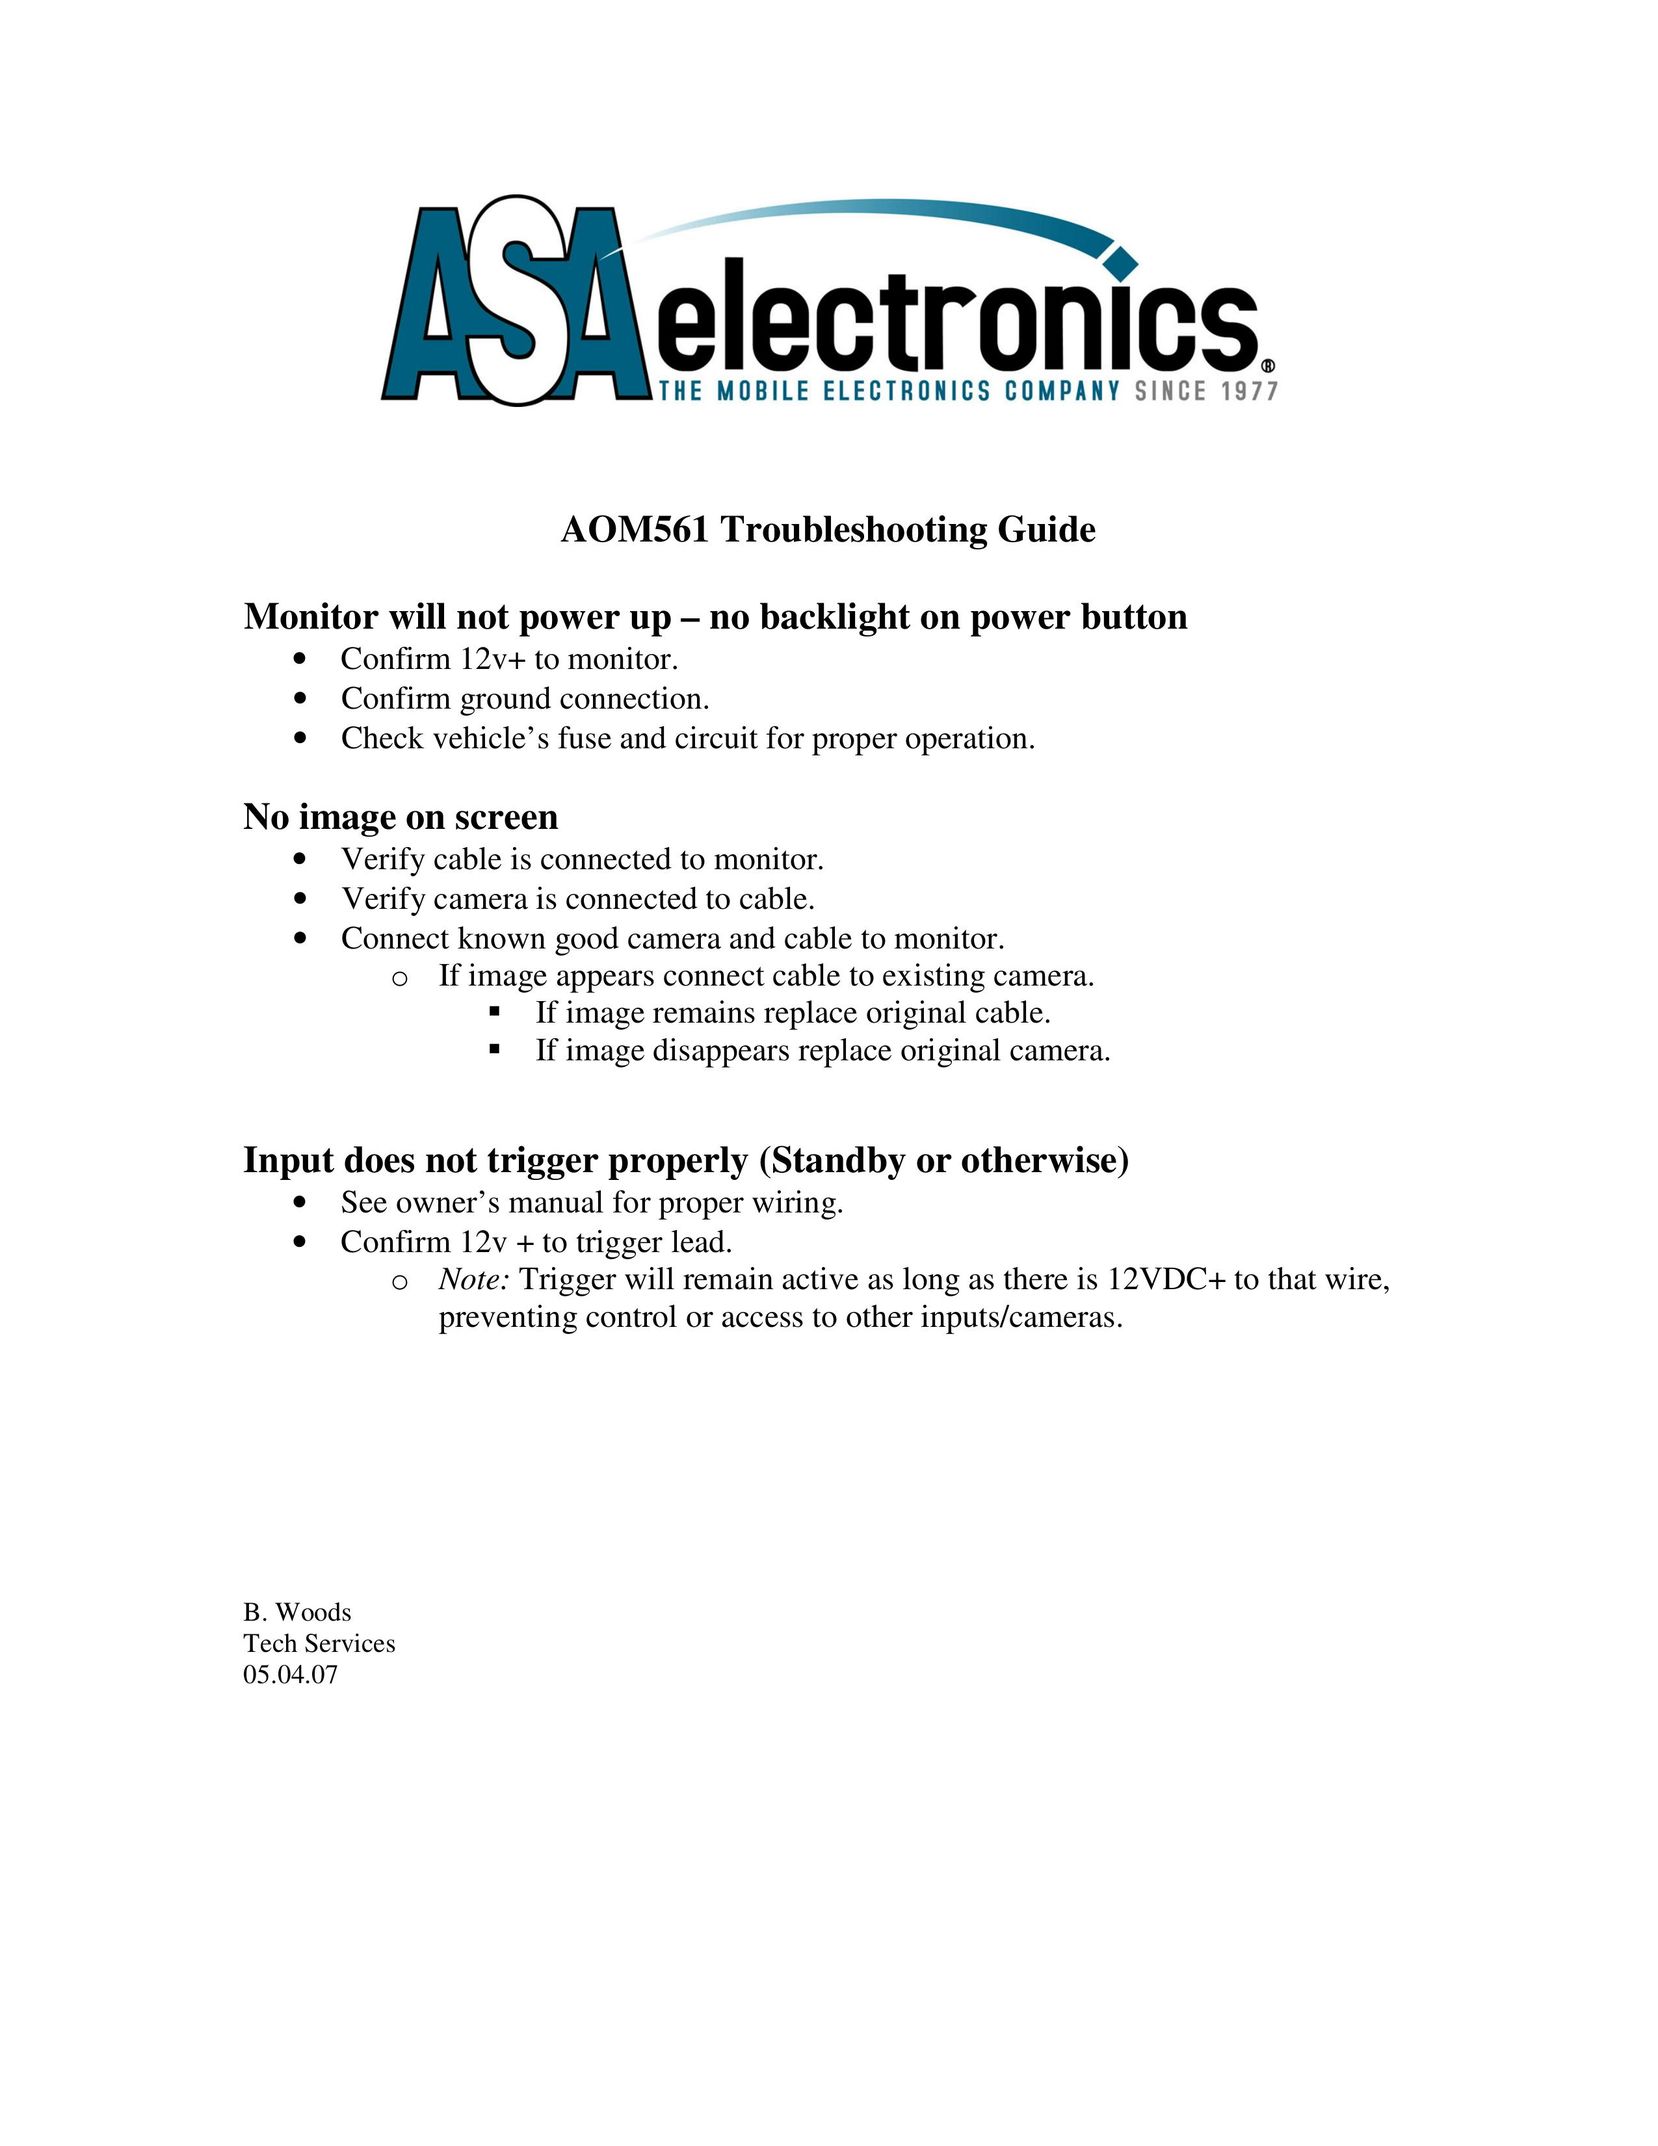 ASA Electronics AOM561 Computer Monitor User Manual